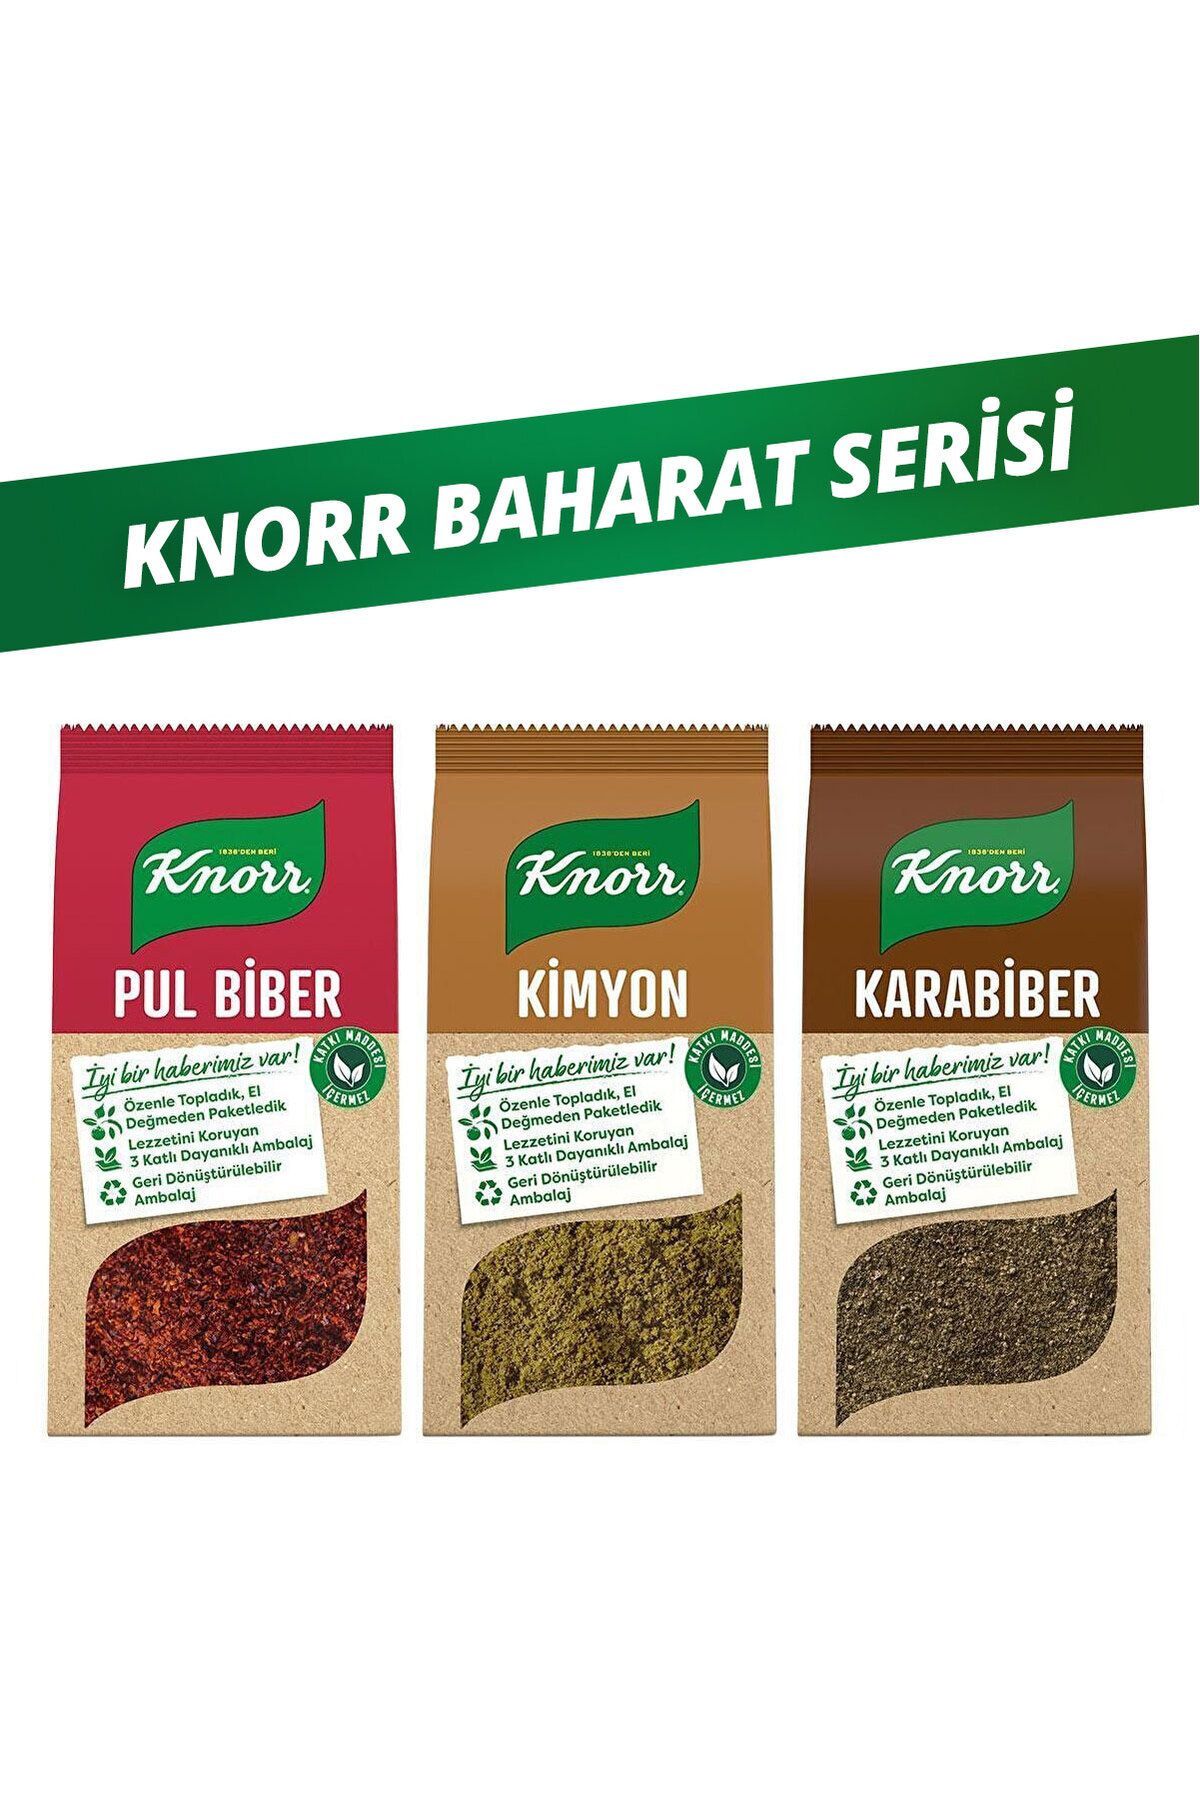 Knorr Baharat Serisi Pul Biber 65gr Karabiber 60gr Kimyon 65gr